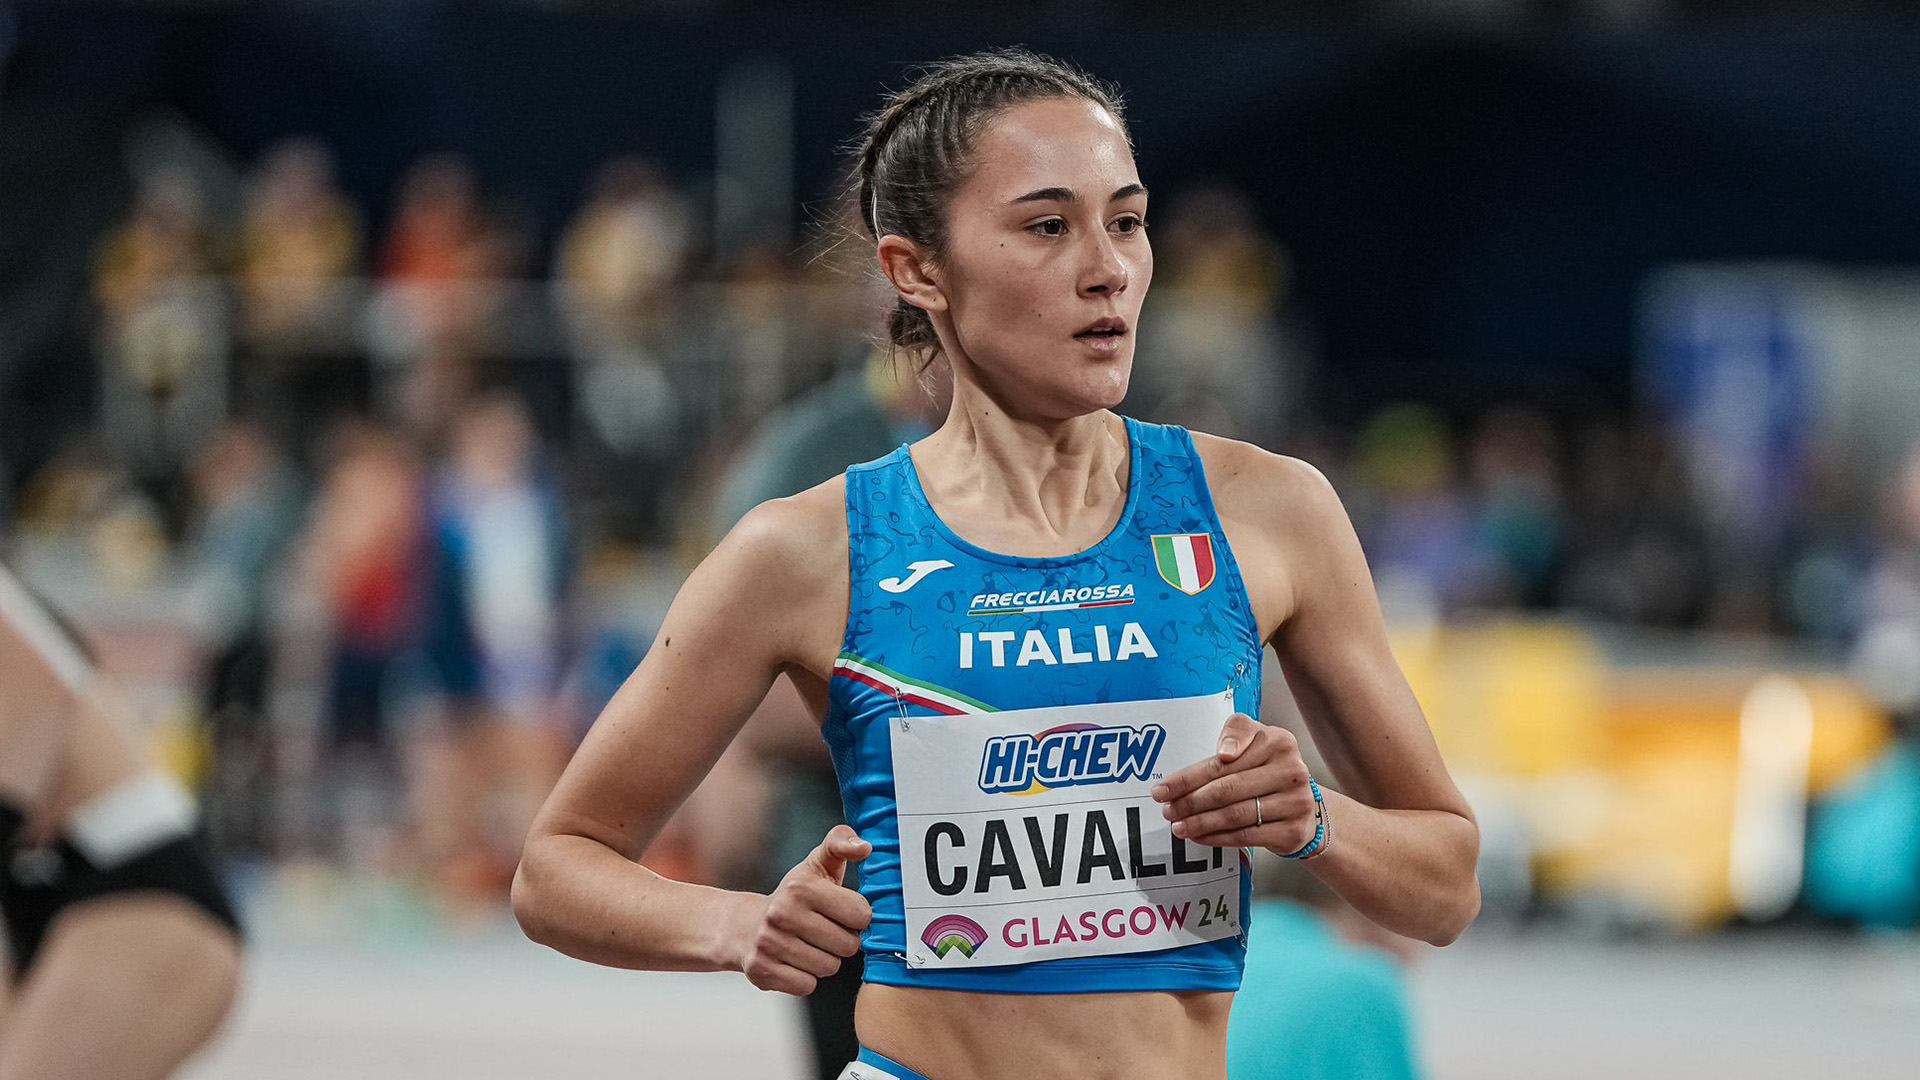 Ludovica Cavalli